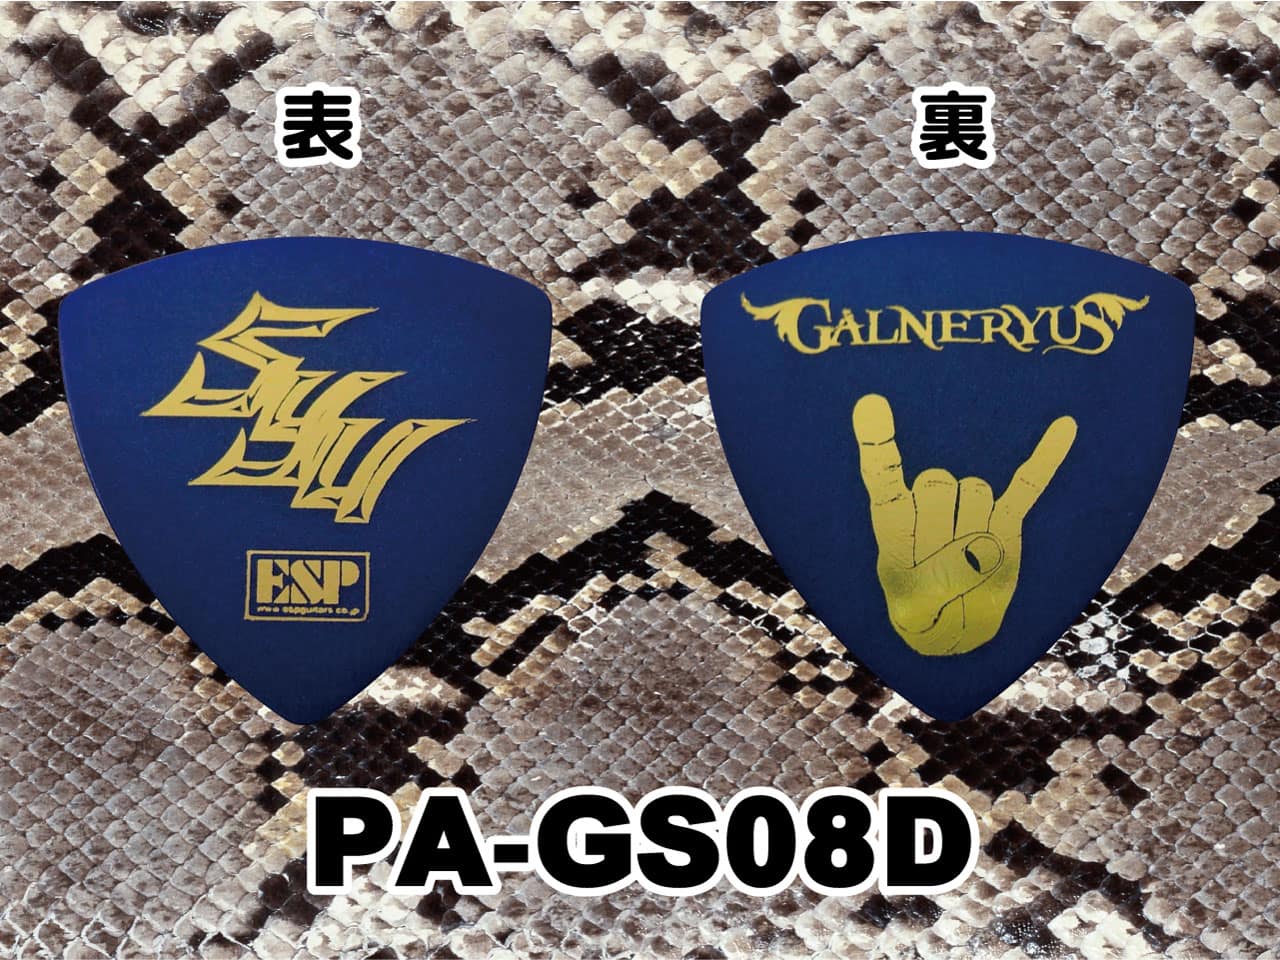 ESP(イーエスピー) Artist Pick Series PA-GS08D (GALNERYUS/SYUモデル)